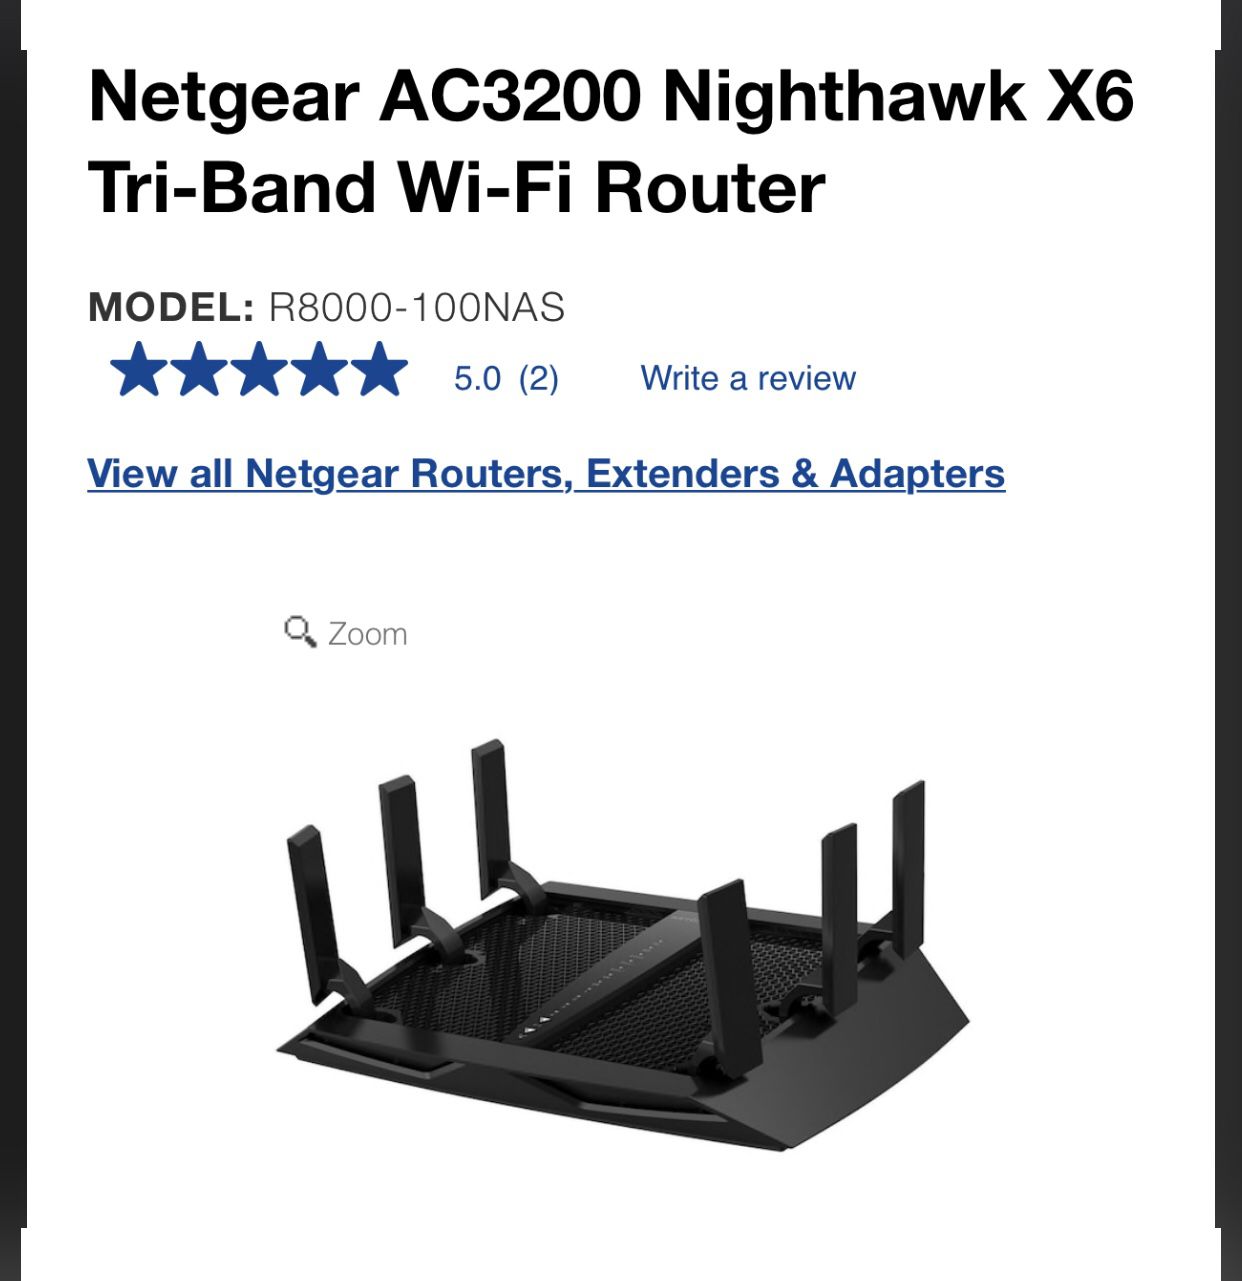 Nighthawk - netgear wi-fi Router